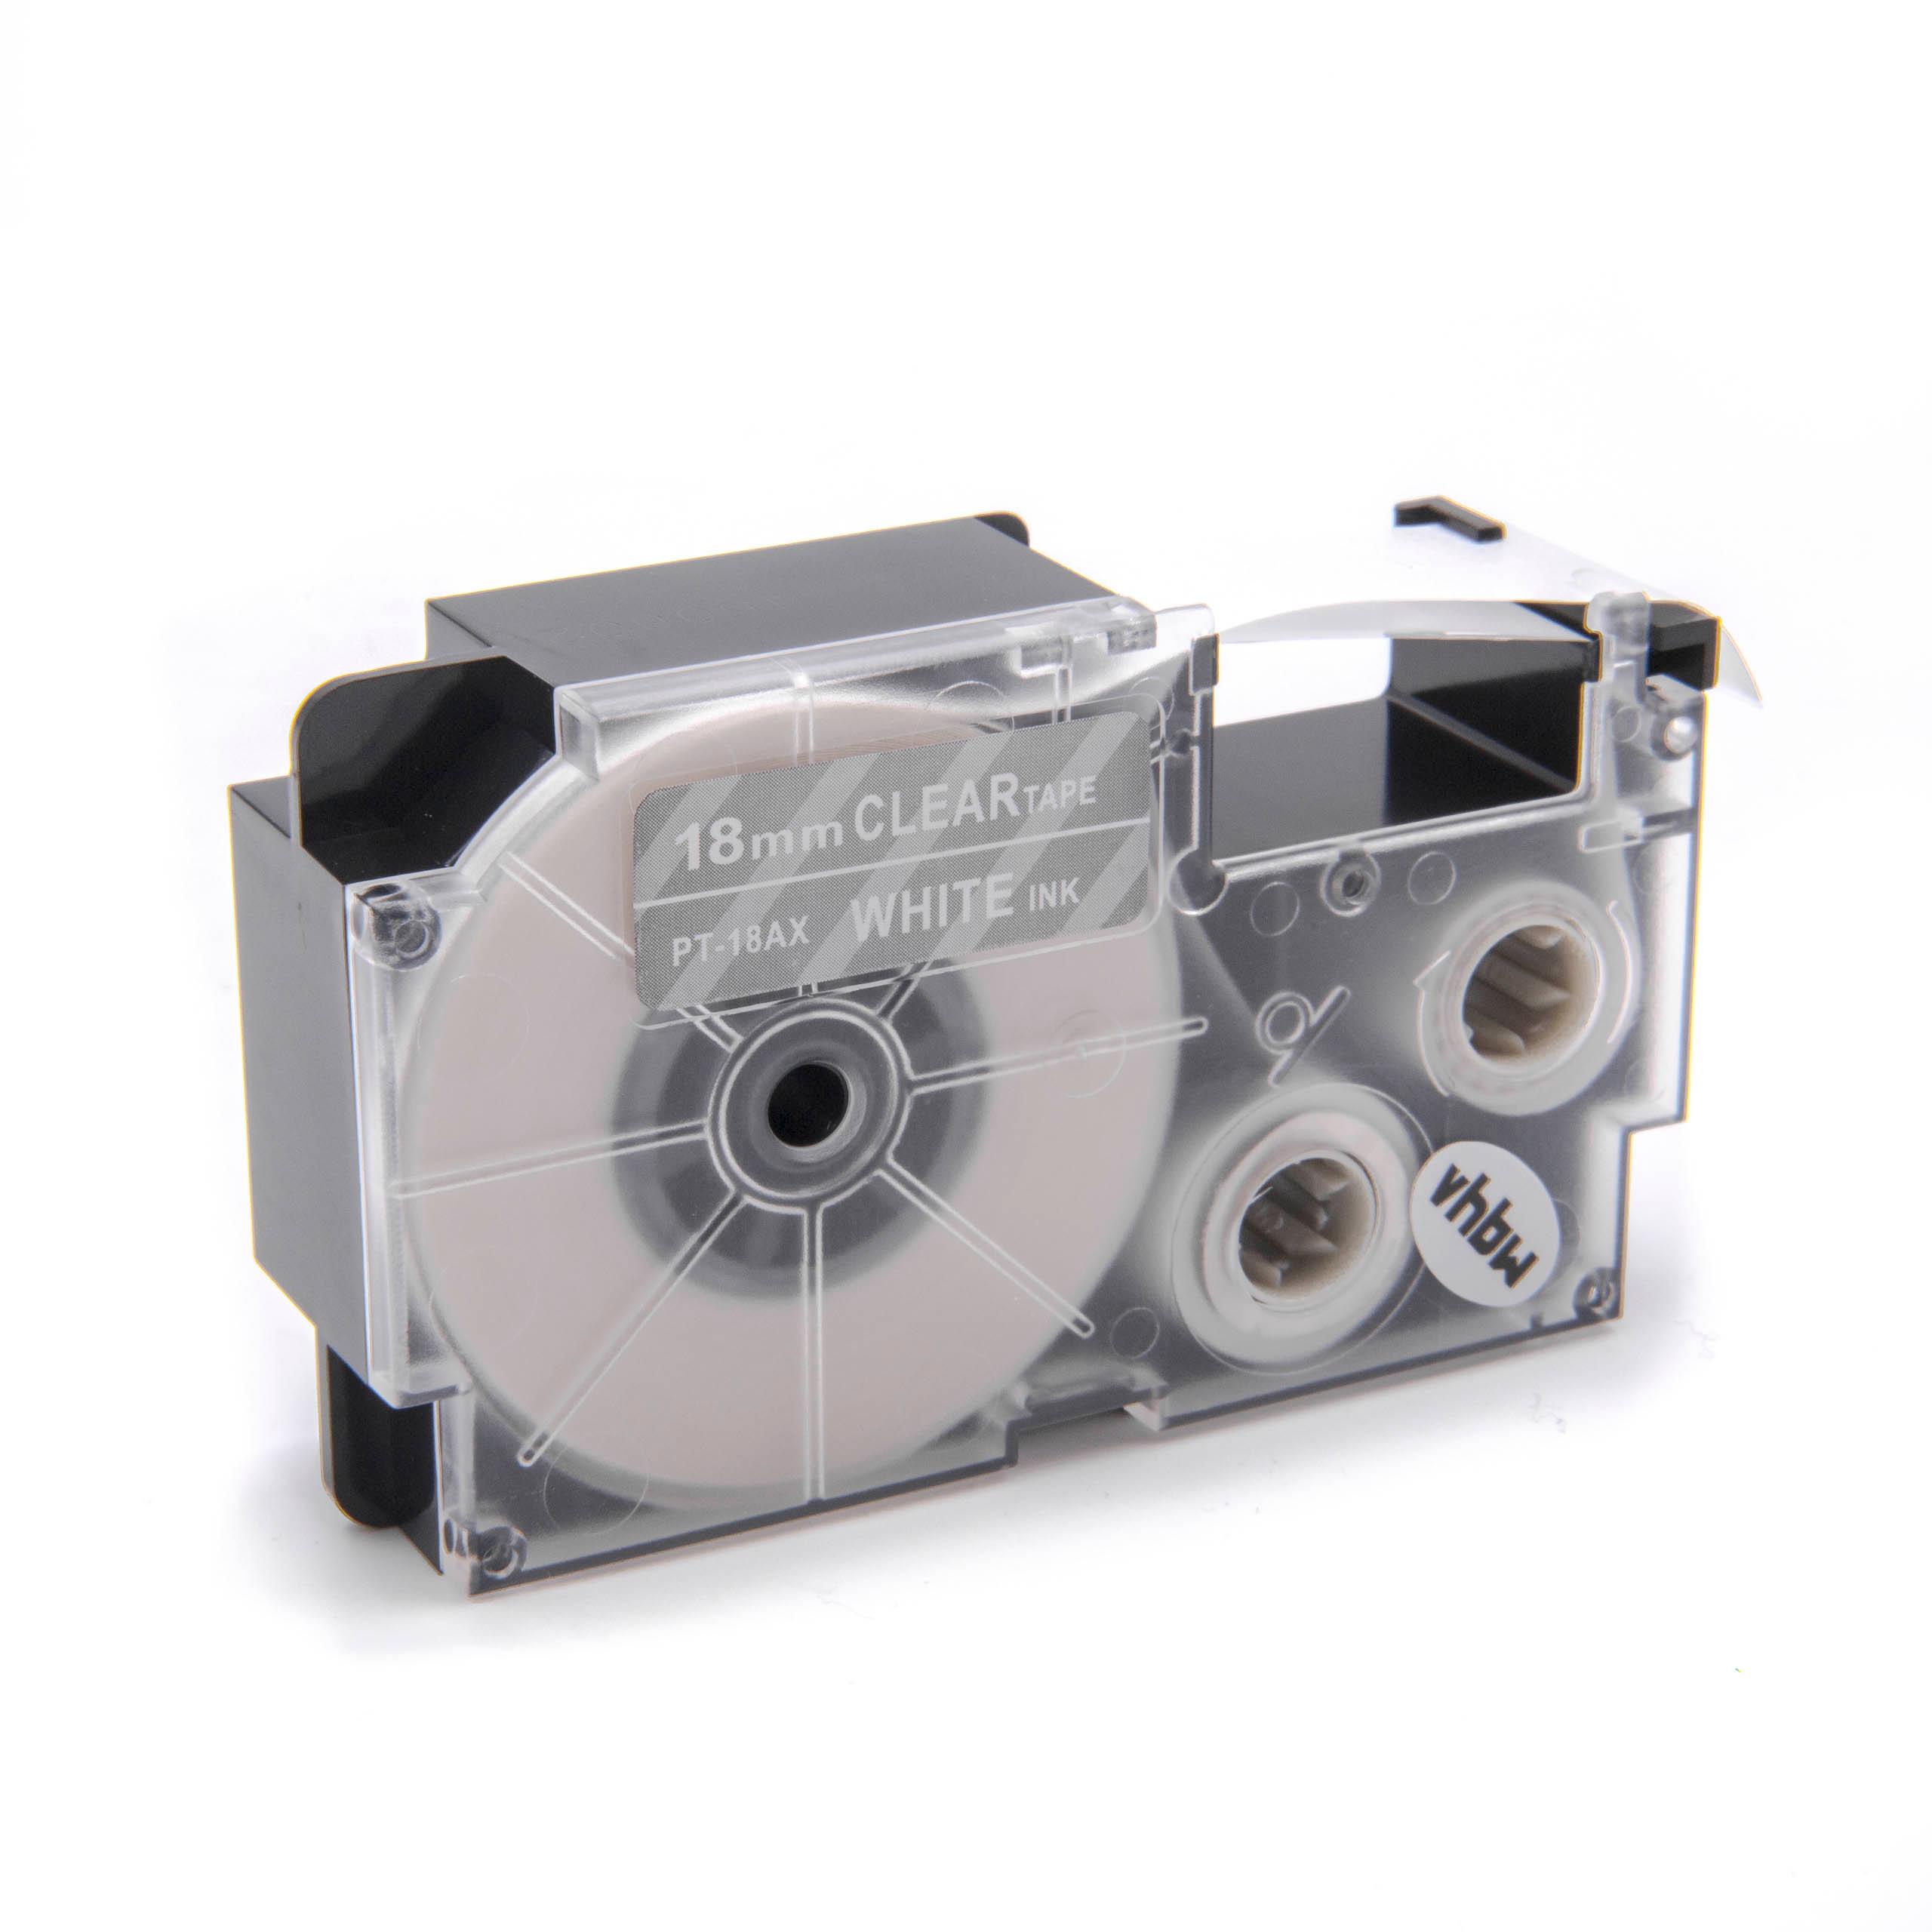 Cassetta nastro sostituisce Casio XR-18AX per etichettatrice Casio 18mm bianco su trasparente, pet+ RESIN